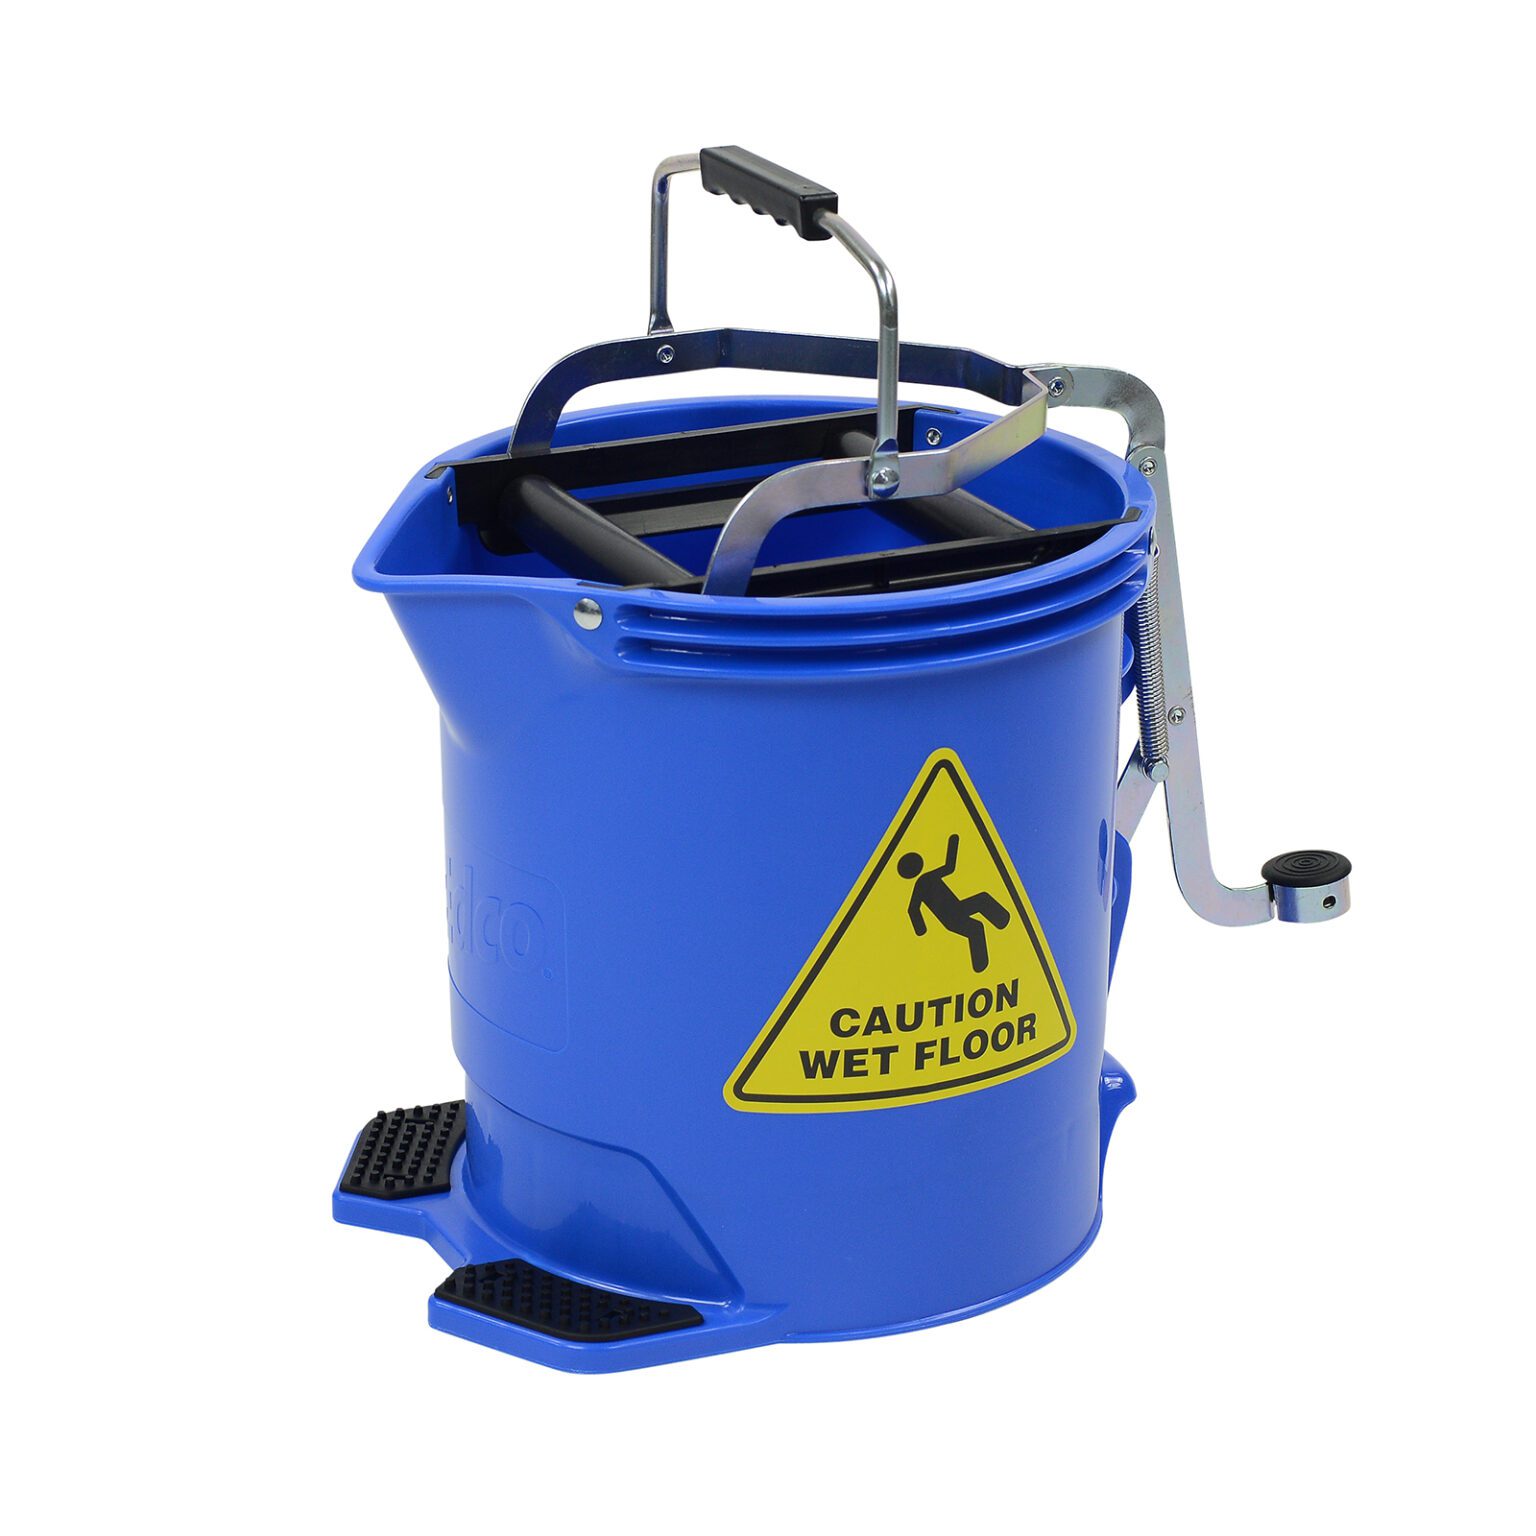 28560-Edco-15L-Metal-Wringer-Bucket-Blue